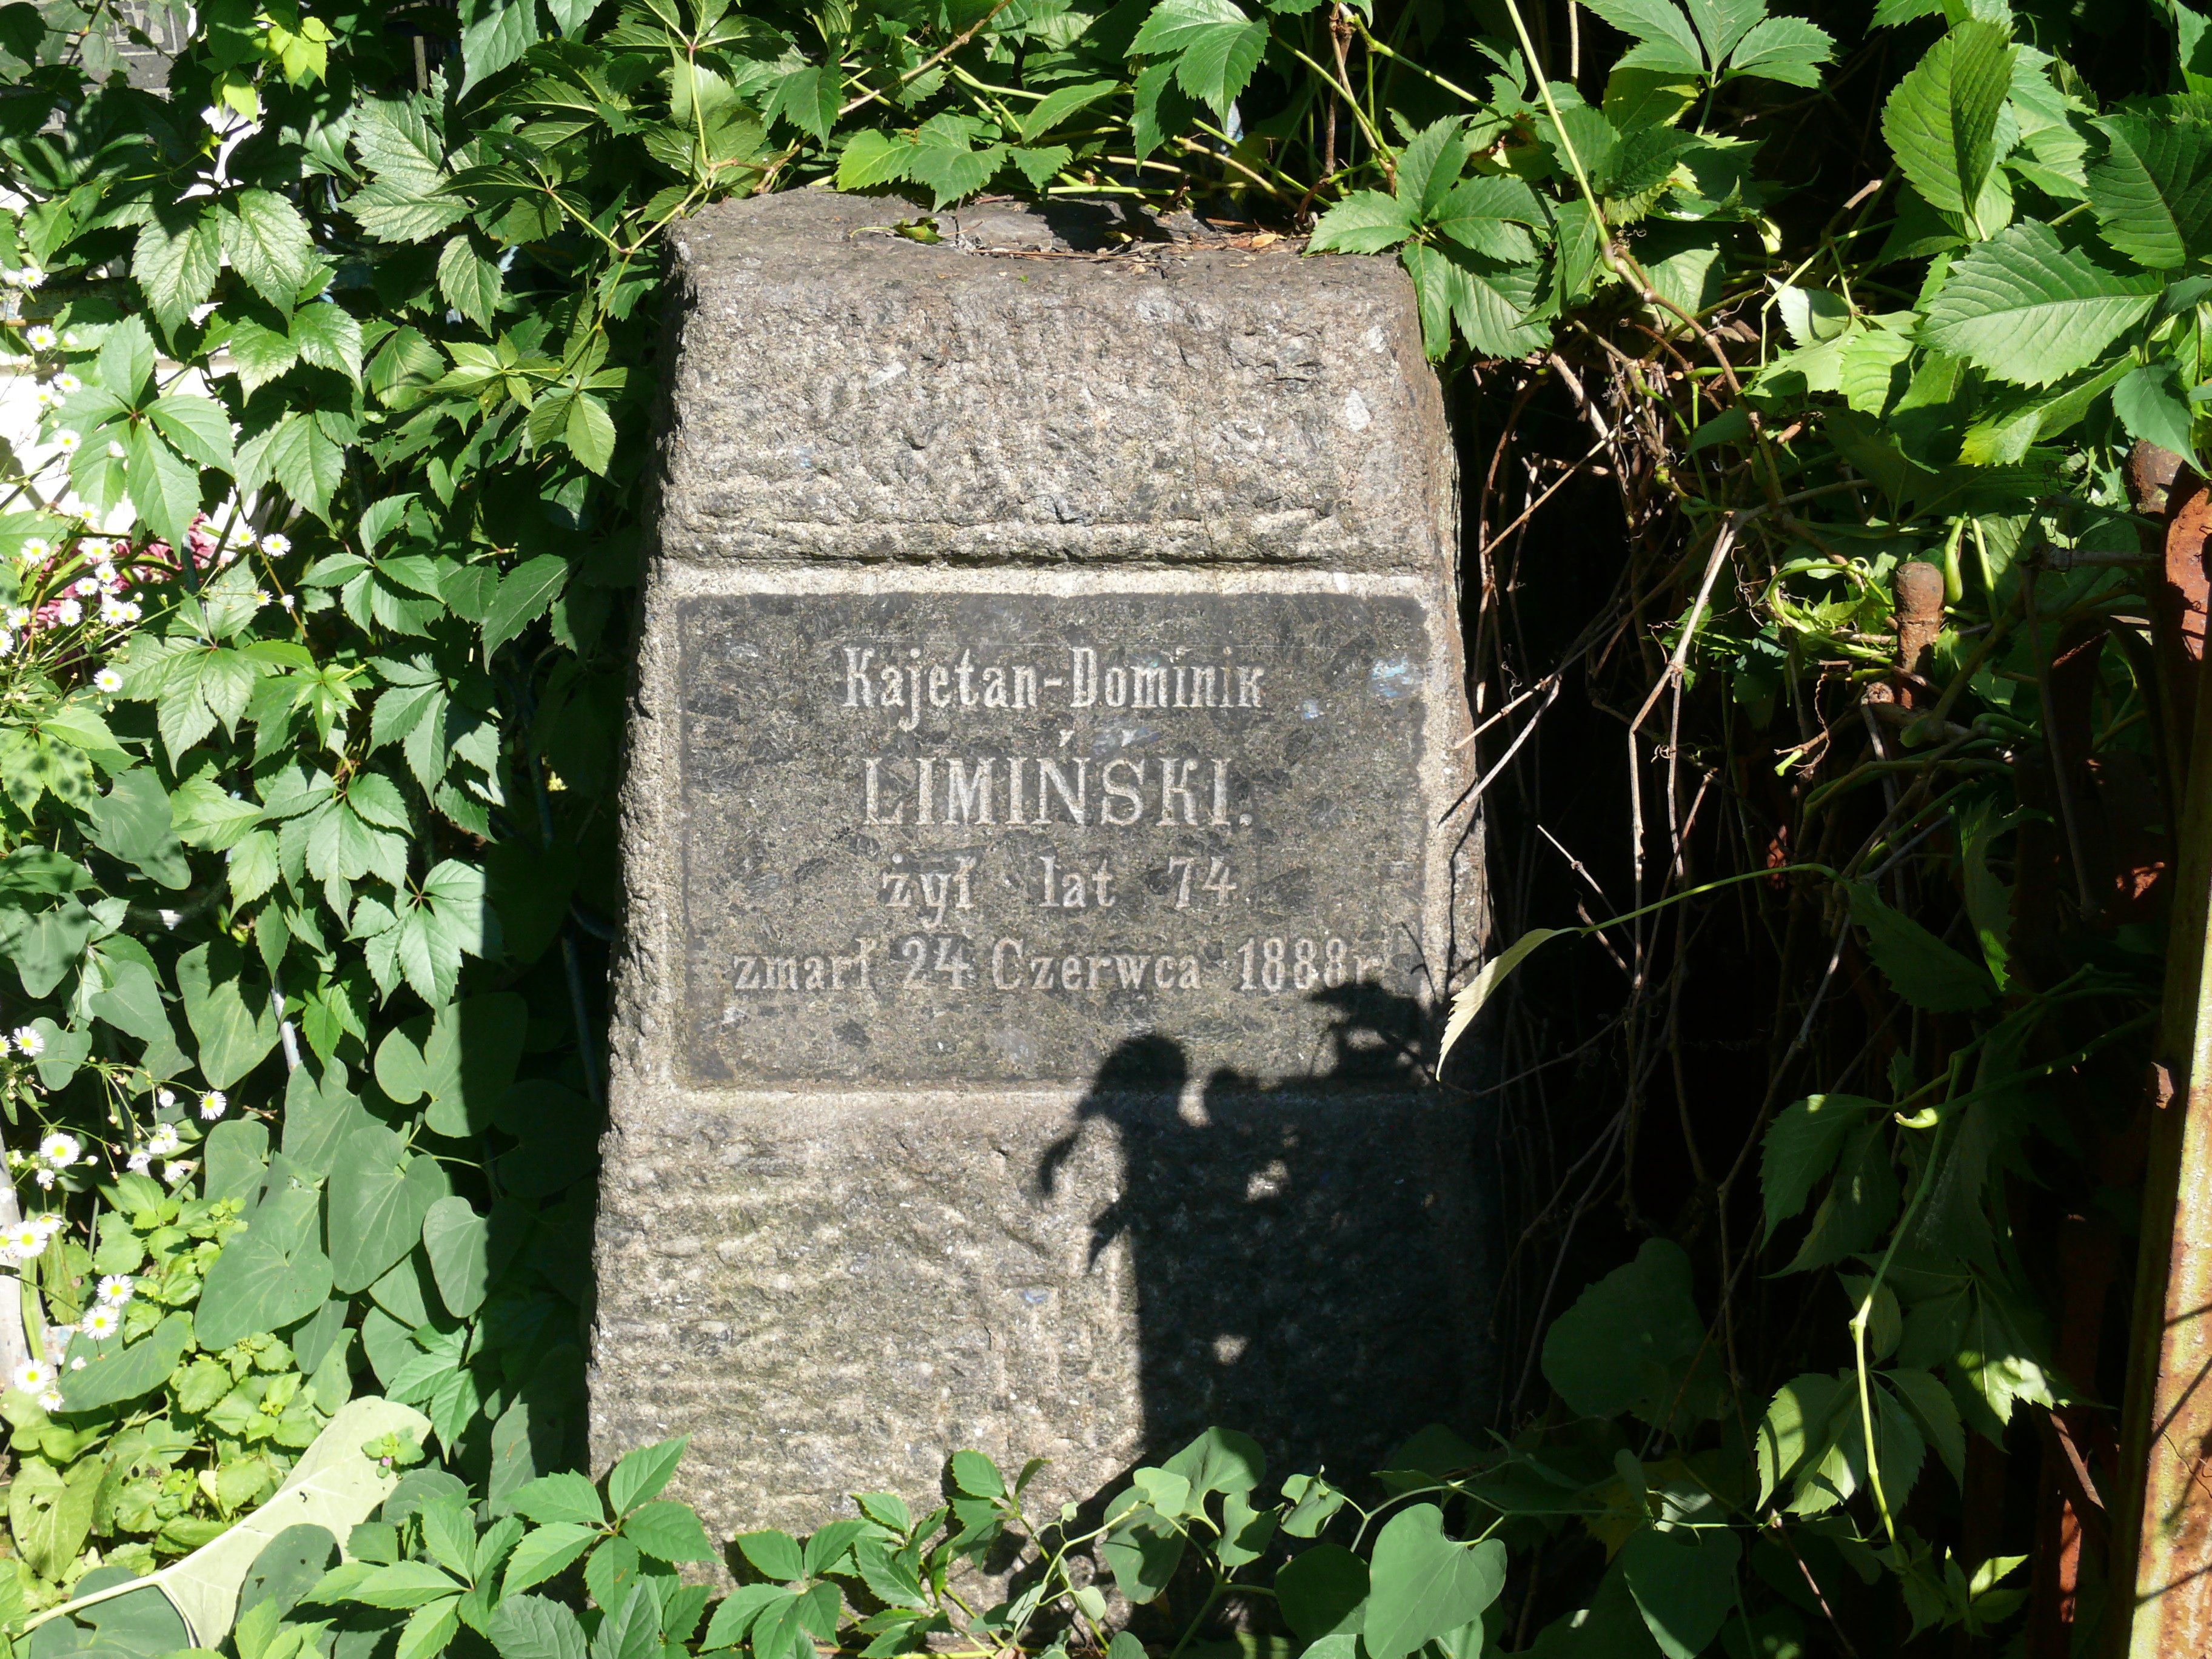 Tombstone of Kajetan Limiński